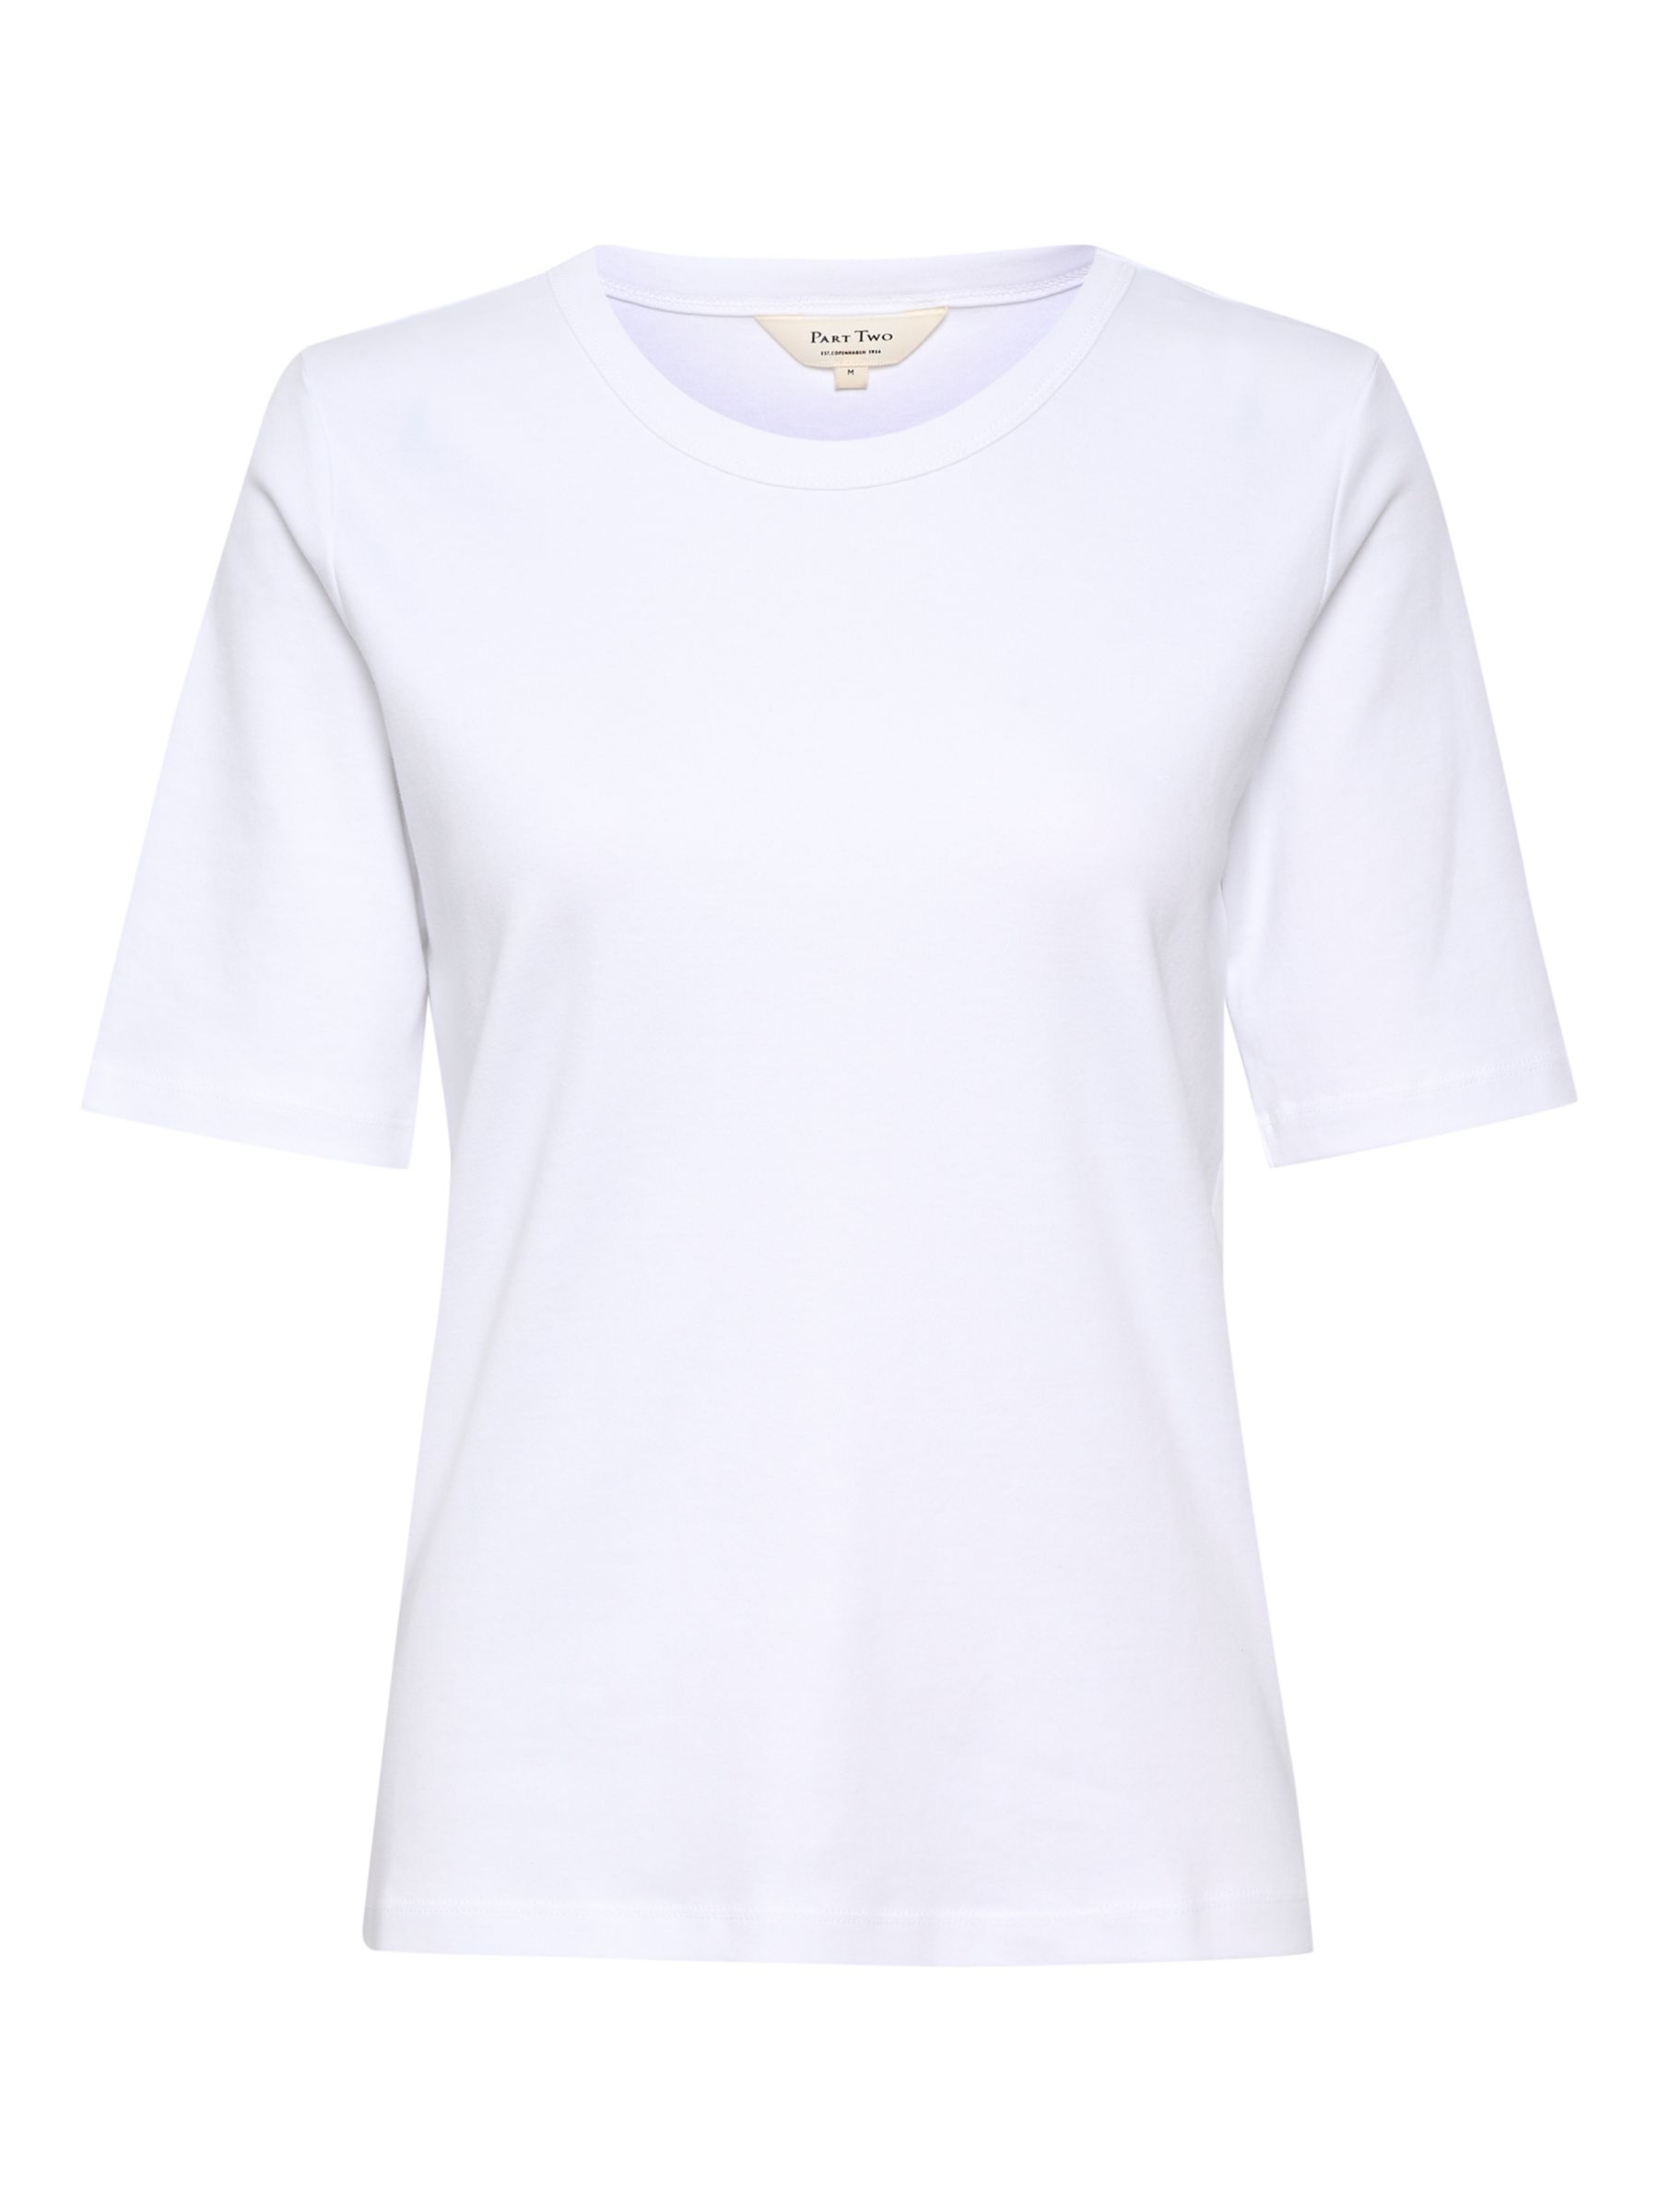 Part Two Ratana Organic Cotton T-shirt, Bright White at John Lewis ...